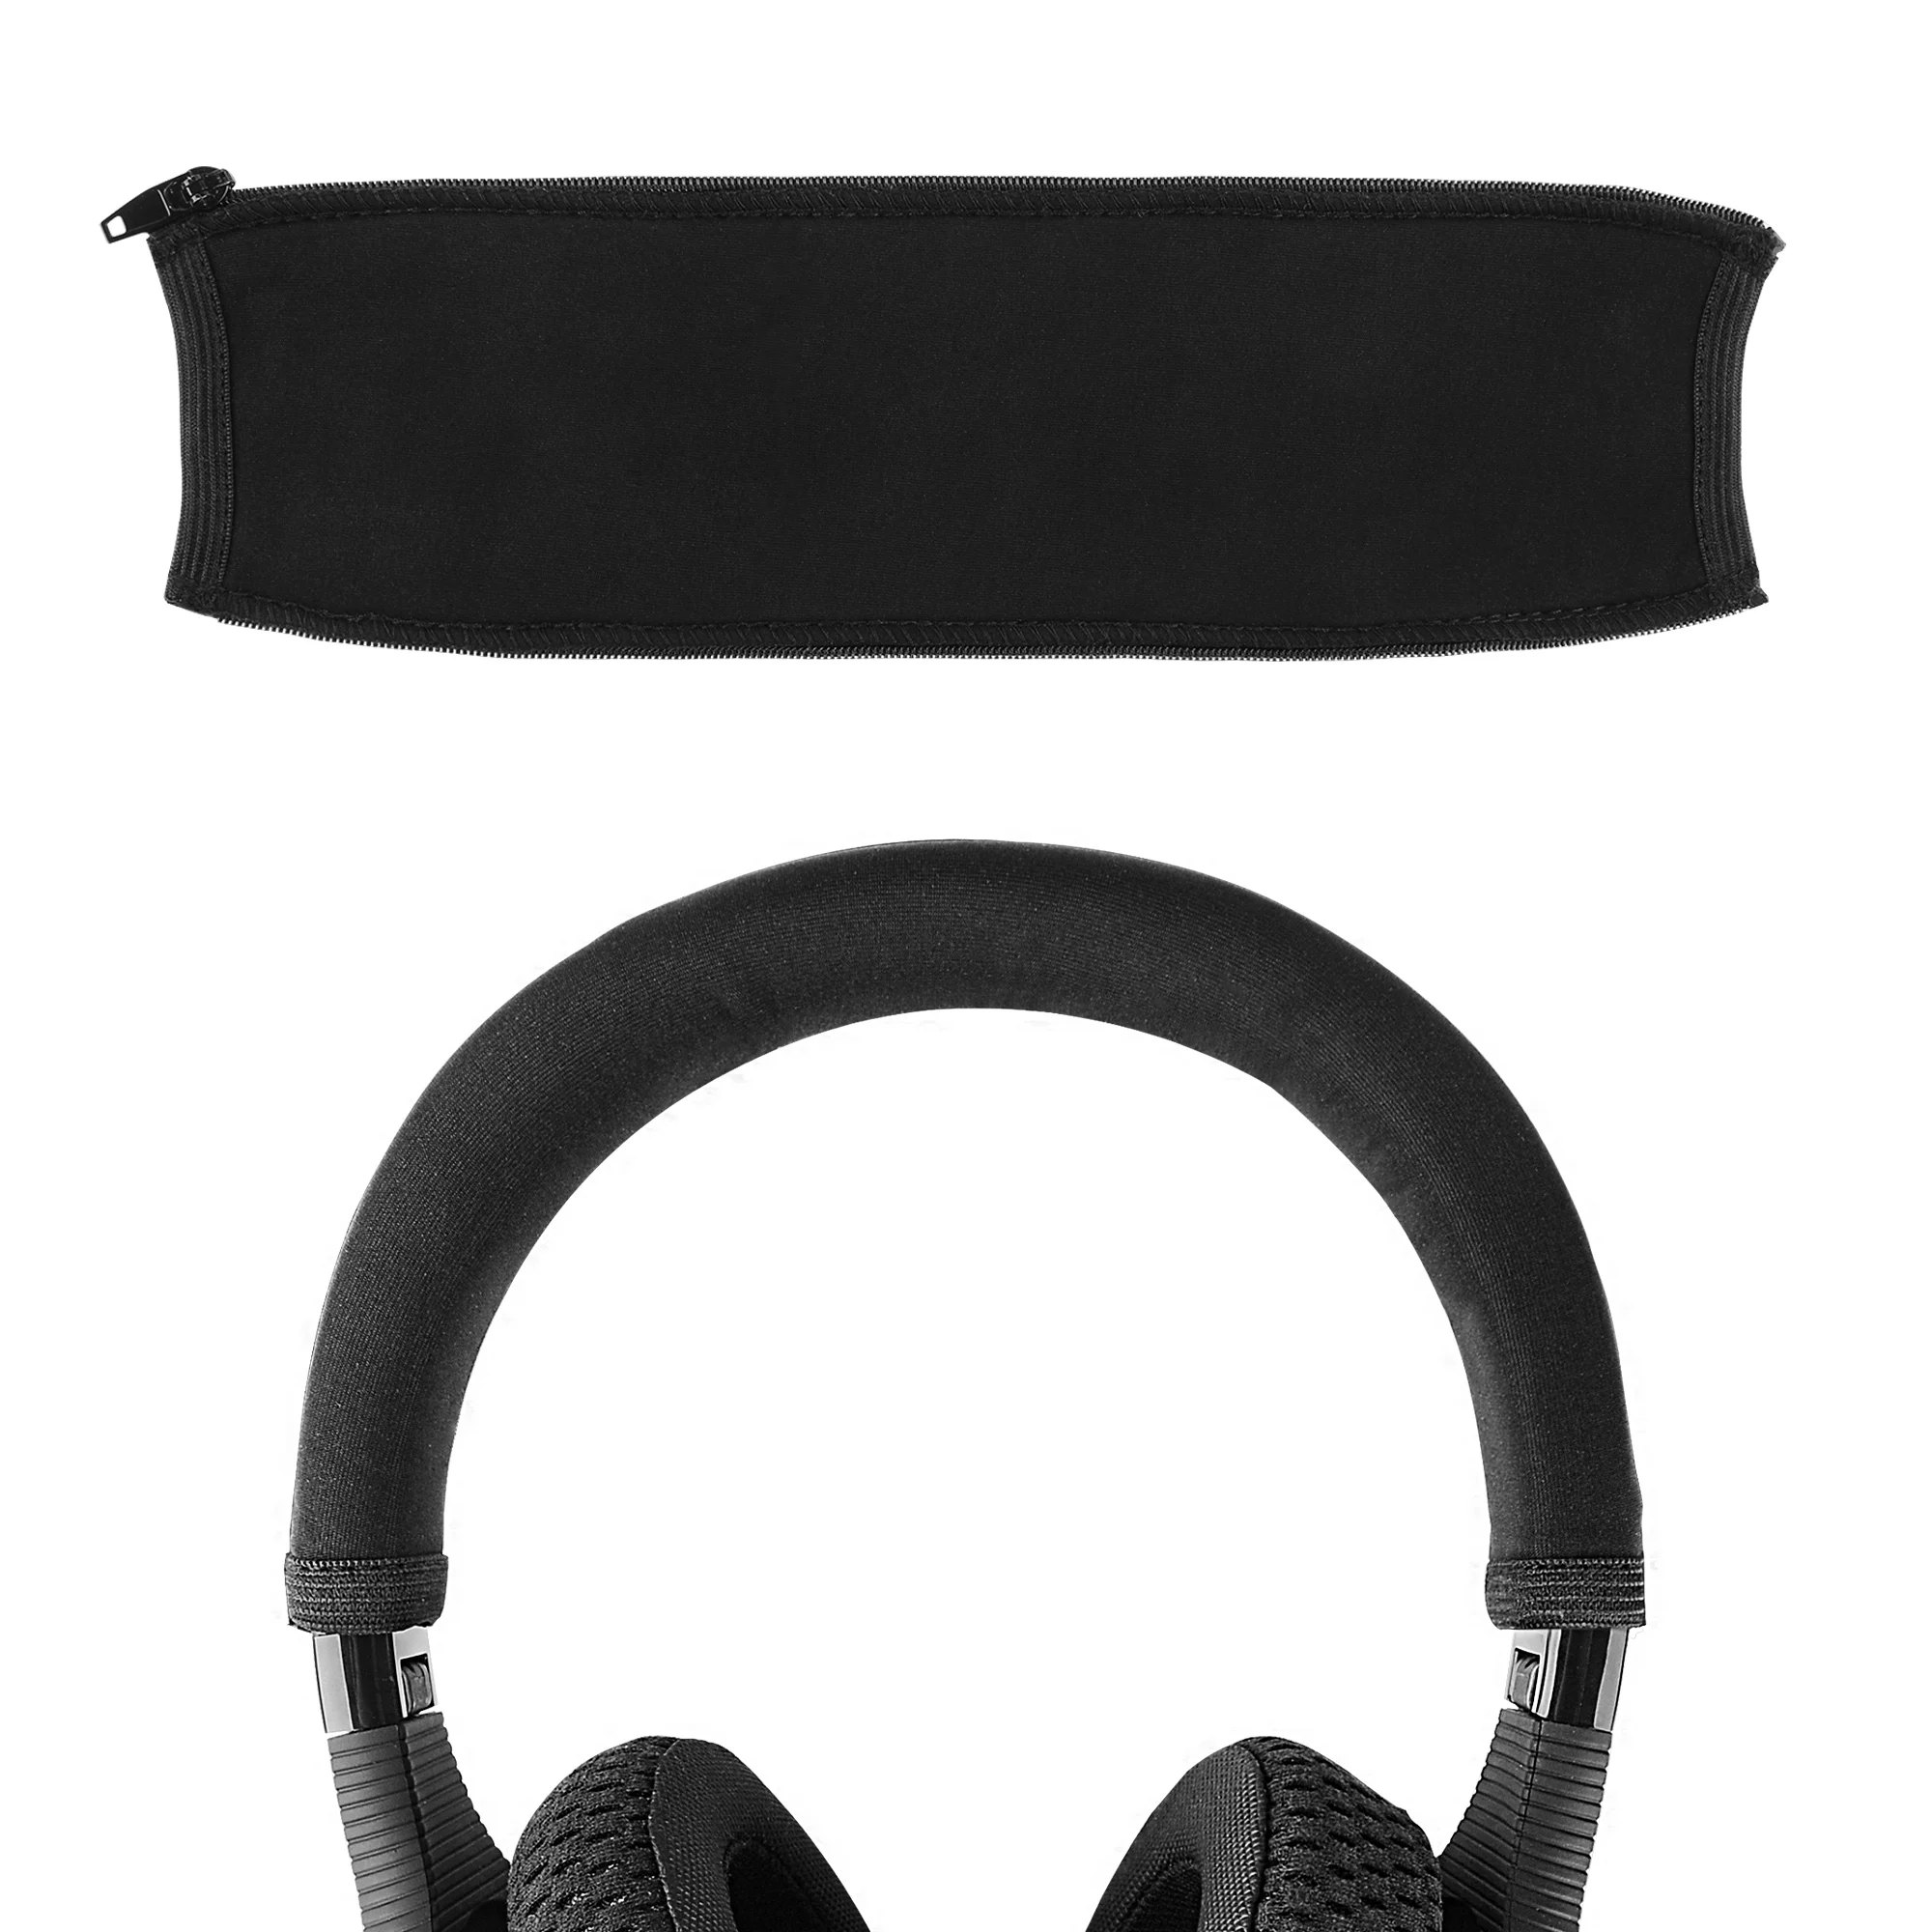 

Geekria Replacement Headphones Headband Cover for JBL Under Armour Sport Wireless, UA Sport Wireless Train On-Ear Headphones